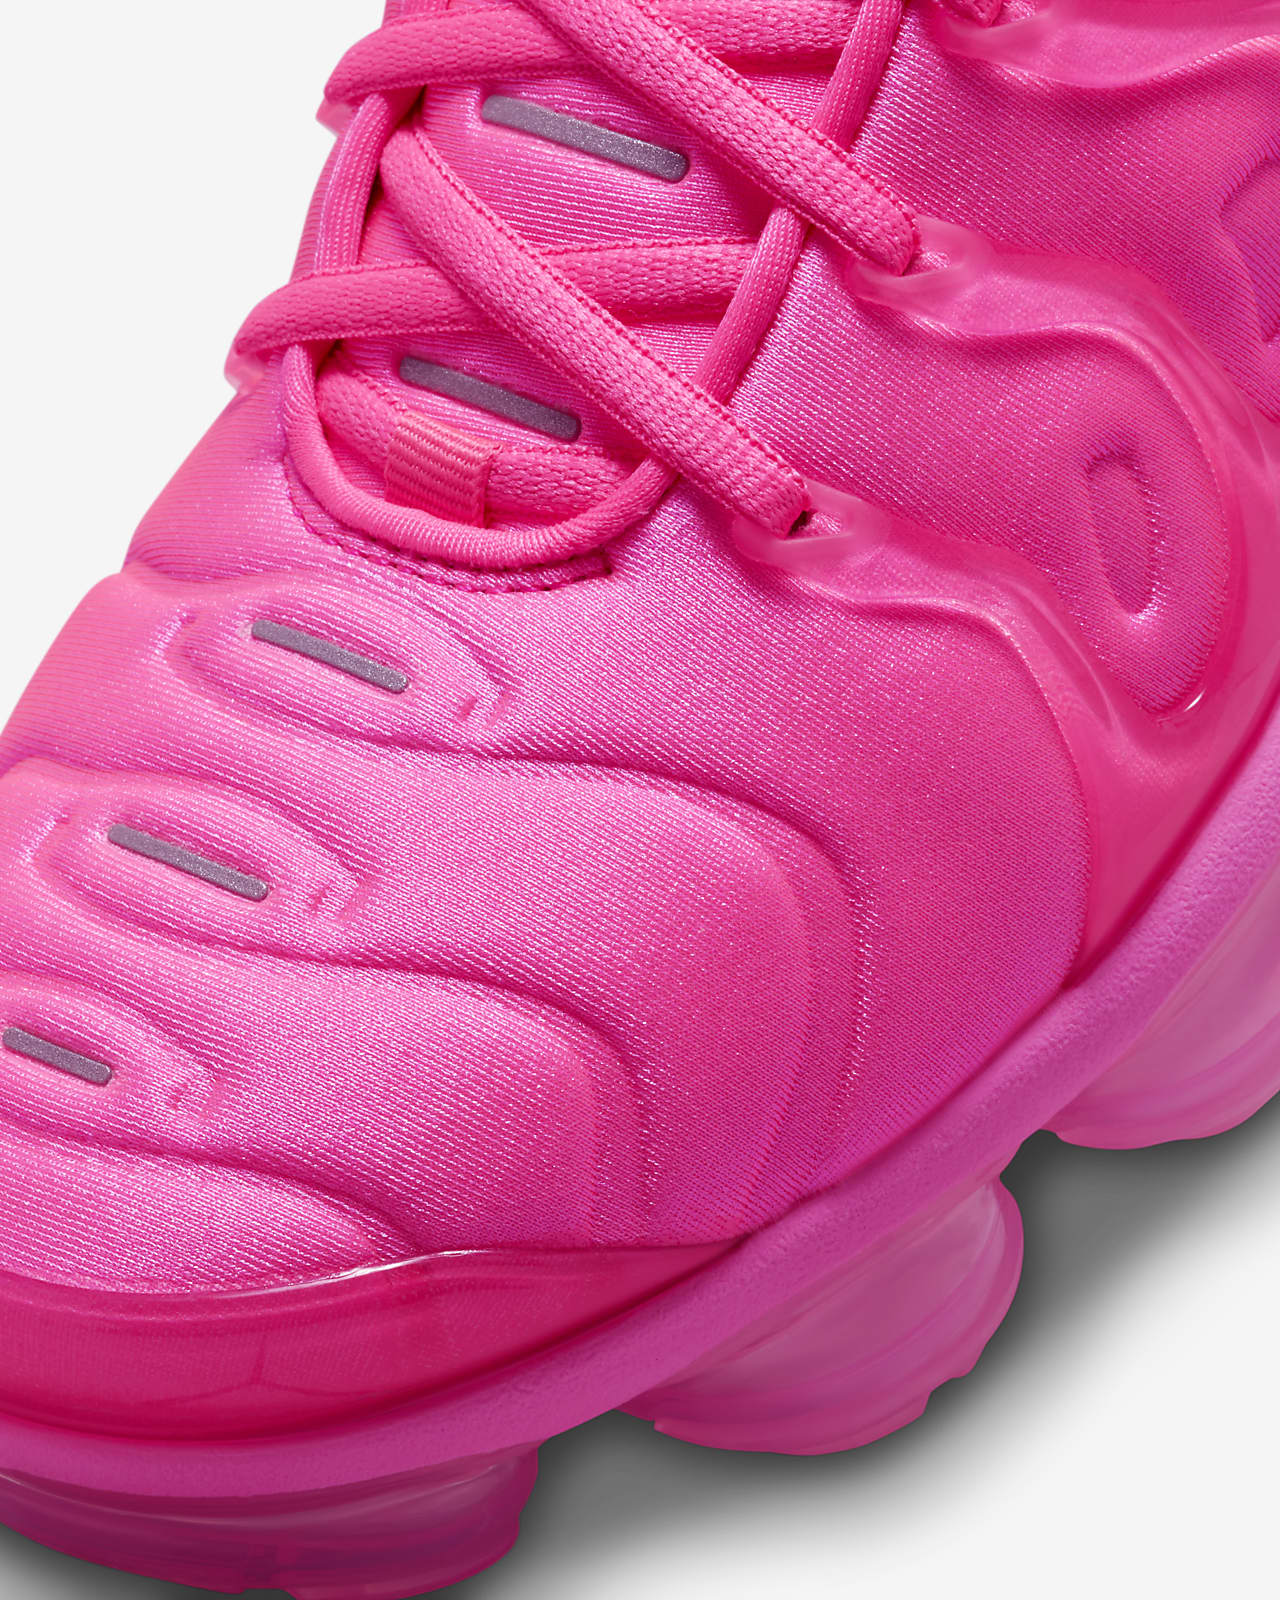 Zoek machine optimalisatie les schoner Nike Air VaporMax Plus Women's Shoes. Nike.com